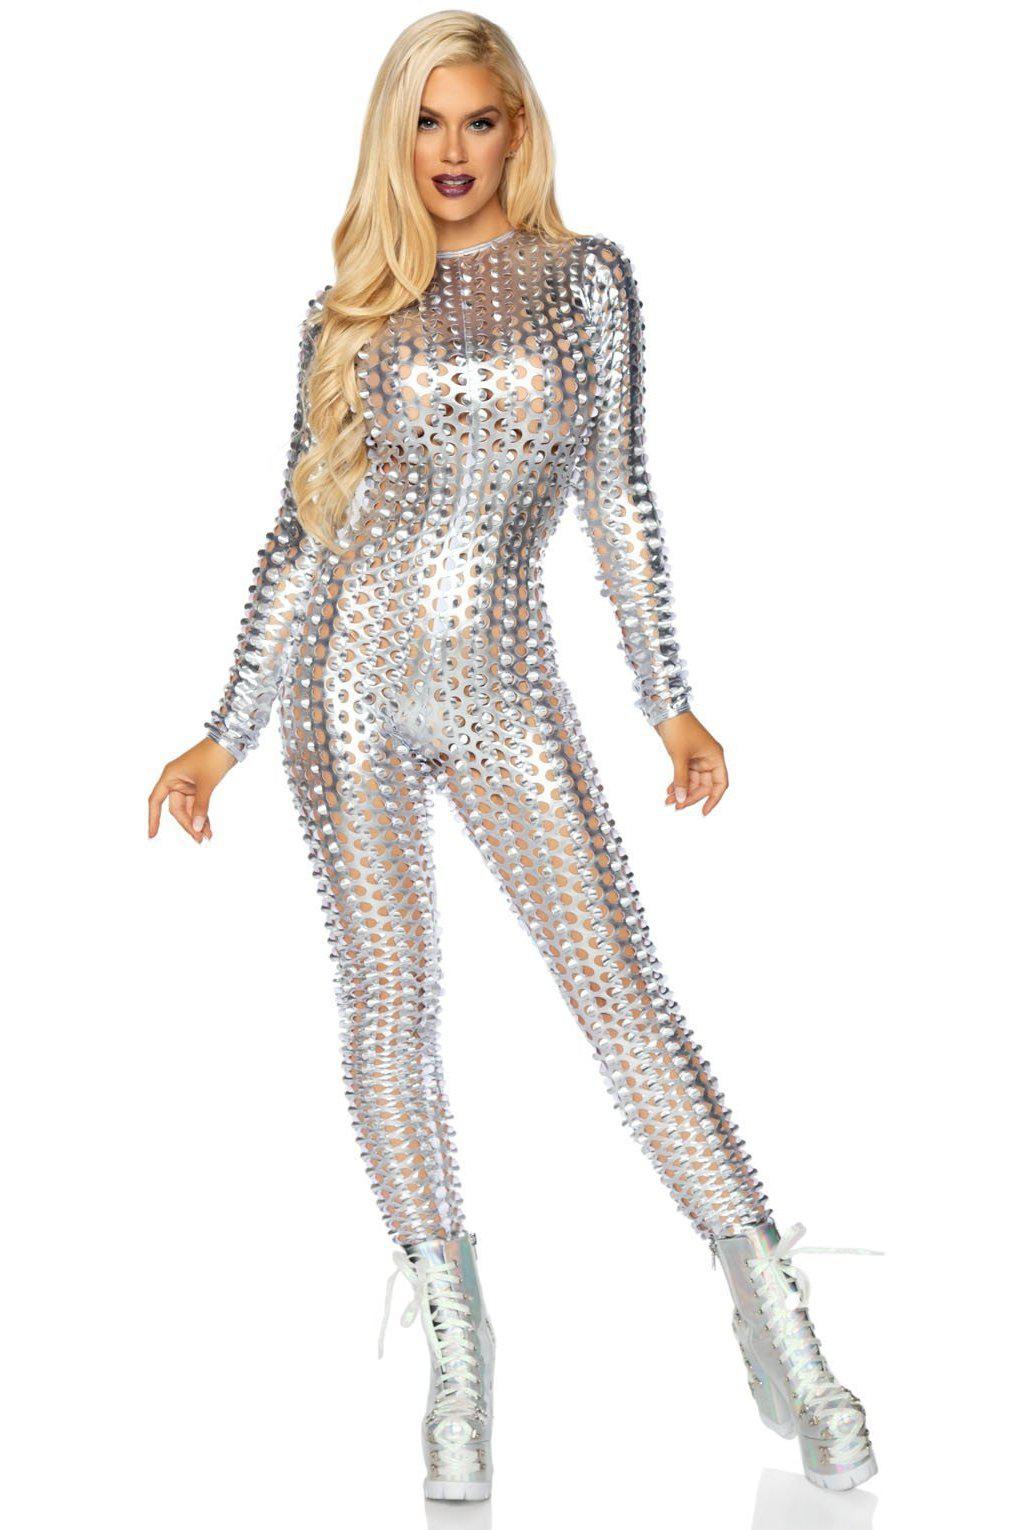 Lasercut Metallic Catsuit-Dancewear Rompers-Leg Avenue-Silver-S-SEXYSHOES.COM